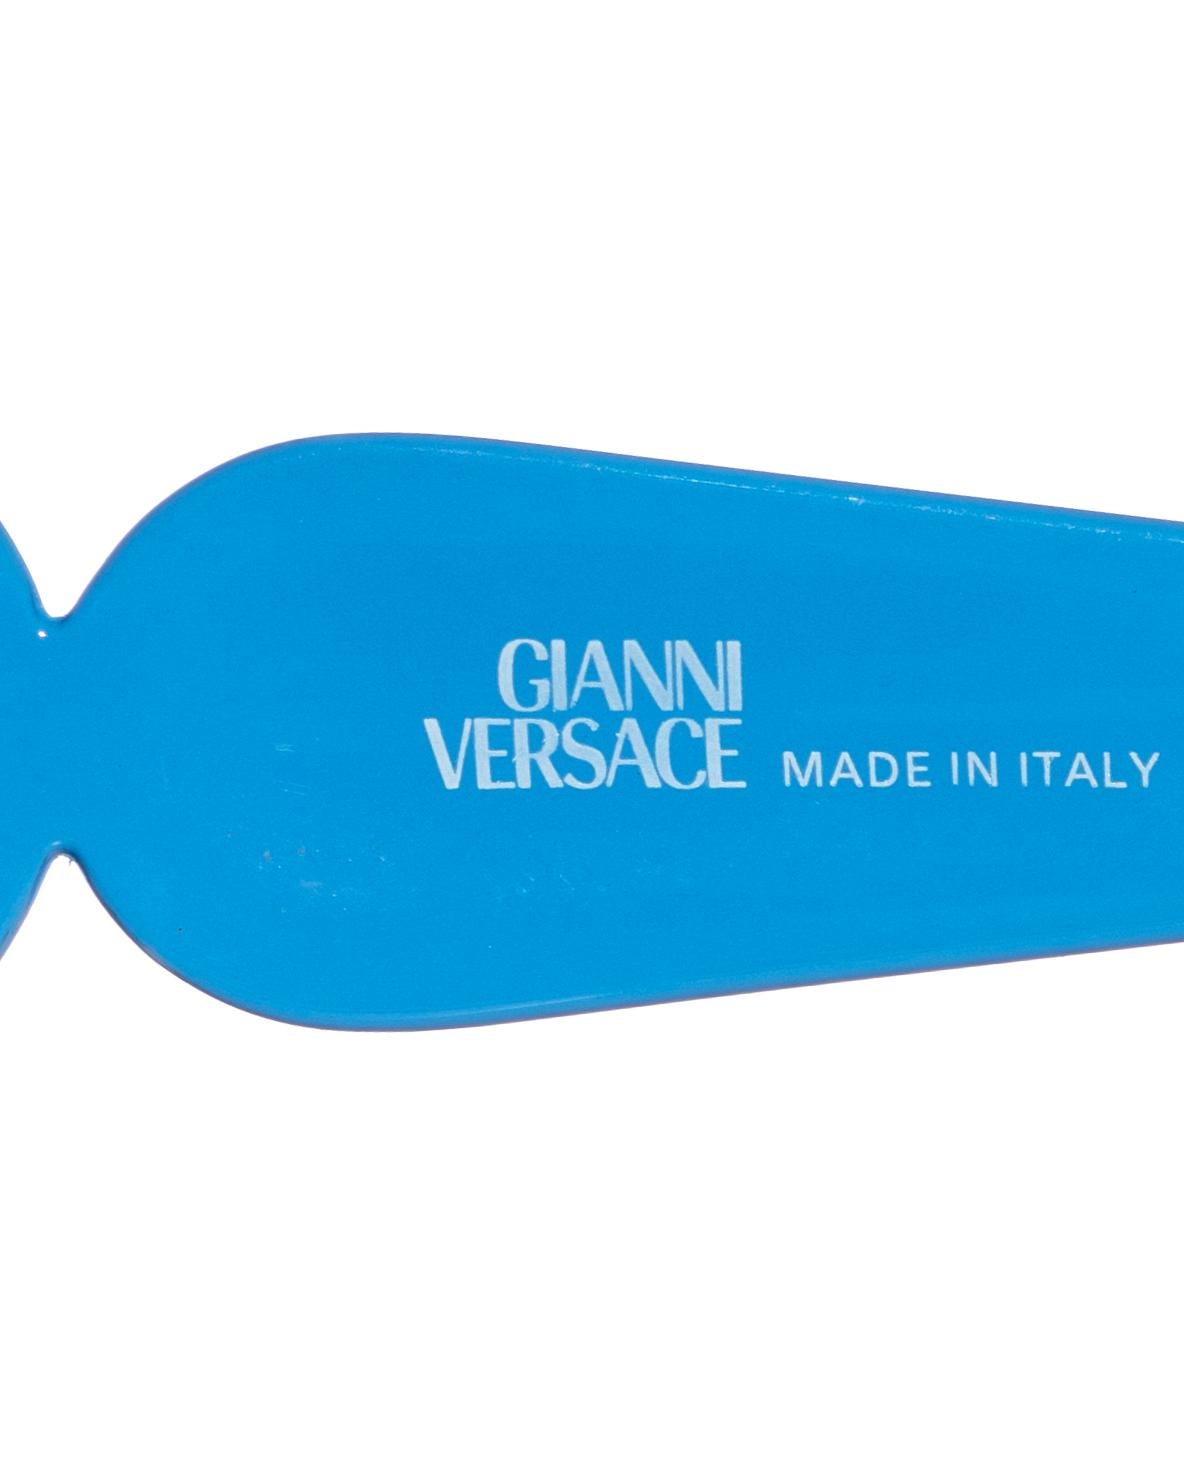 Gianni Versace unisex blue rhinestone sunglasses, fw 1996 2